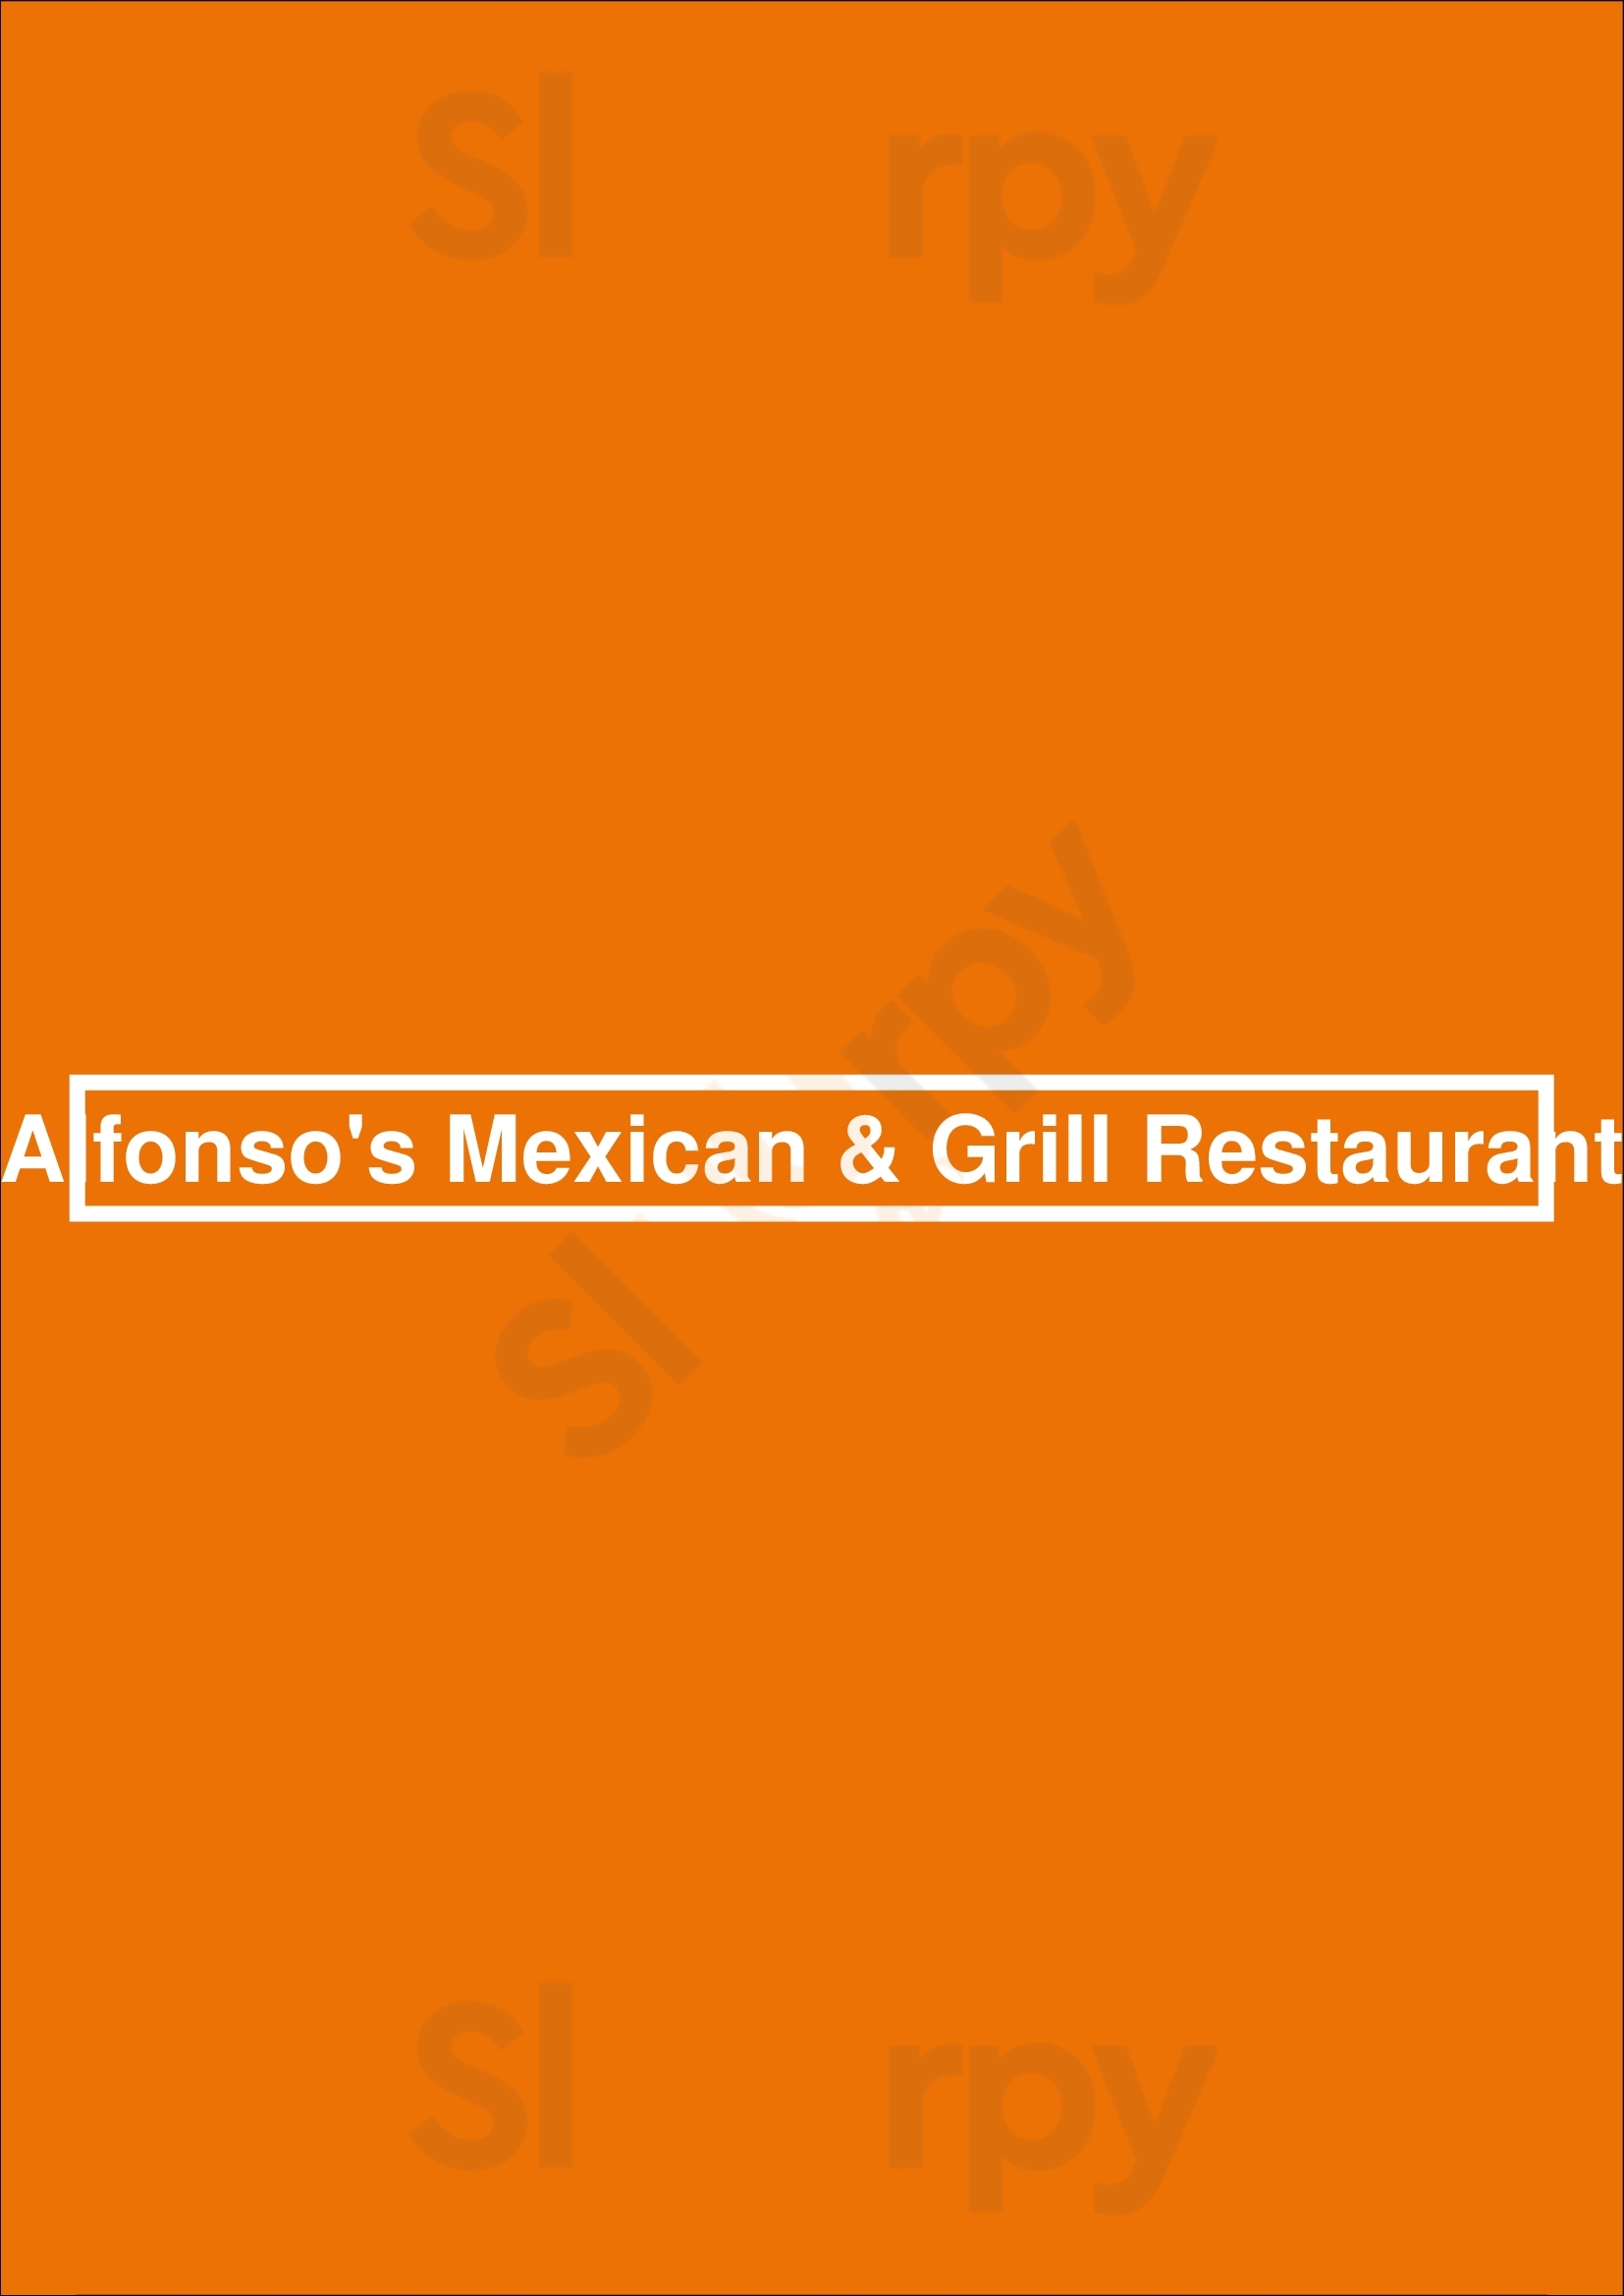 Alfonso's Mexican & Grill Restaurant Amsterdam Menu - 1